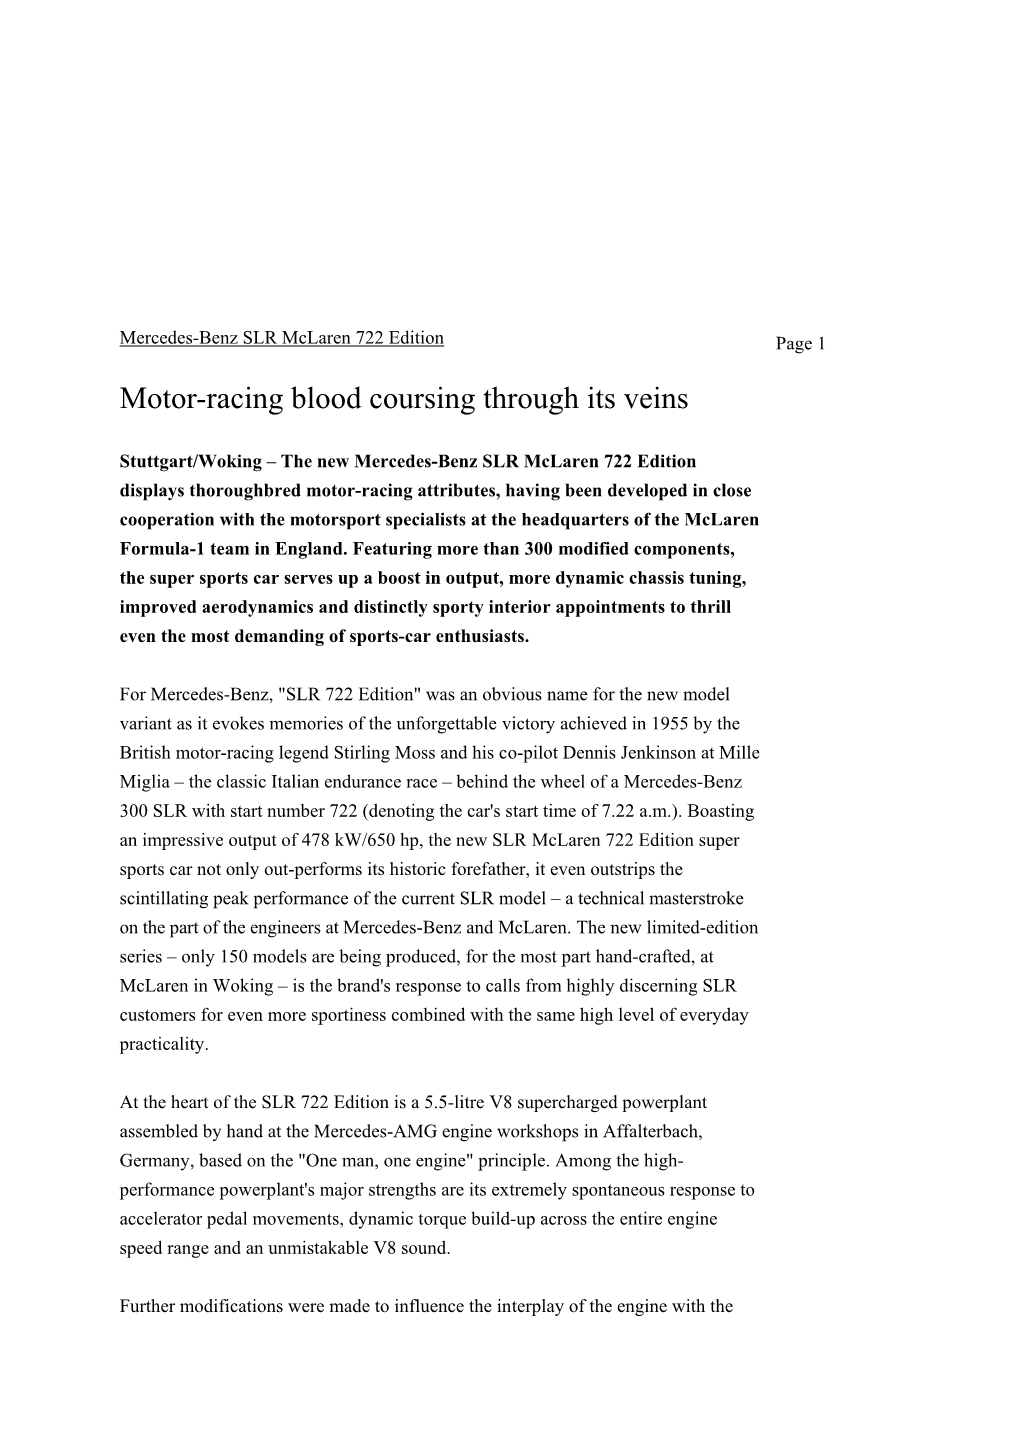 Motor-Racing Blood Coursing Through Its Veins